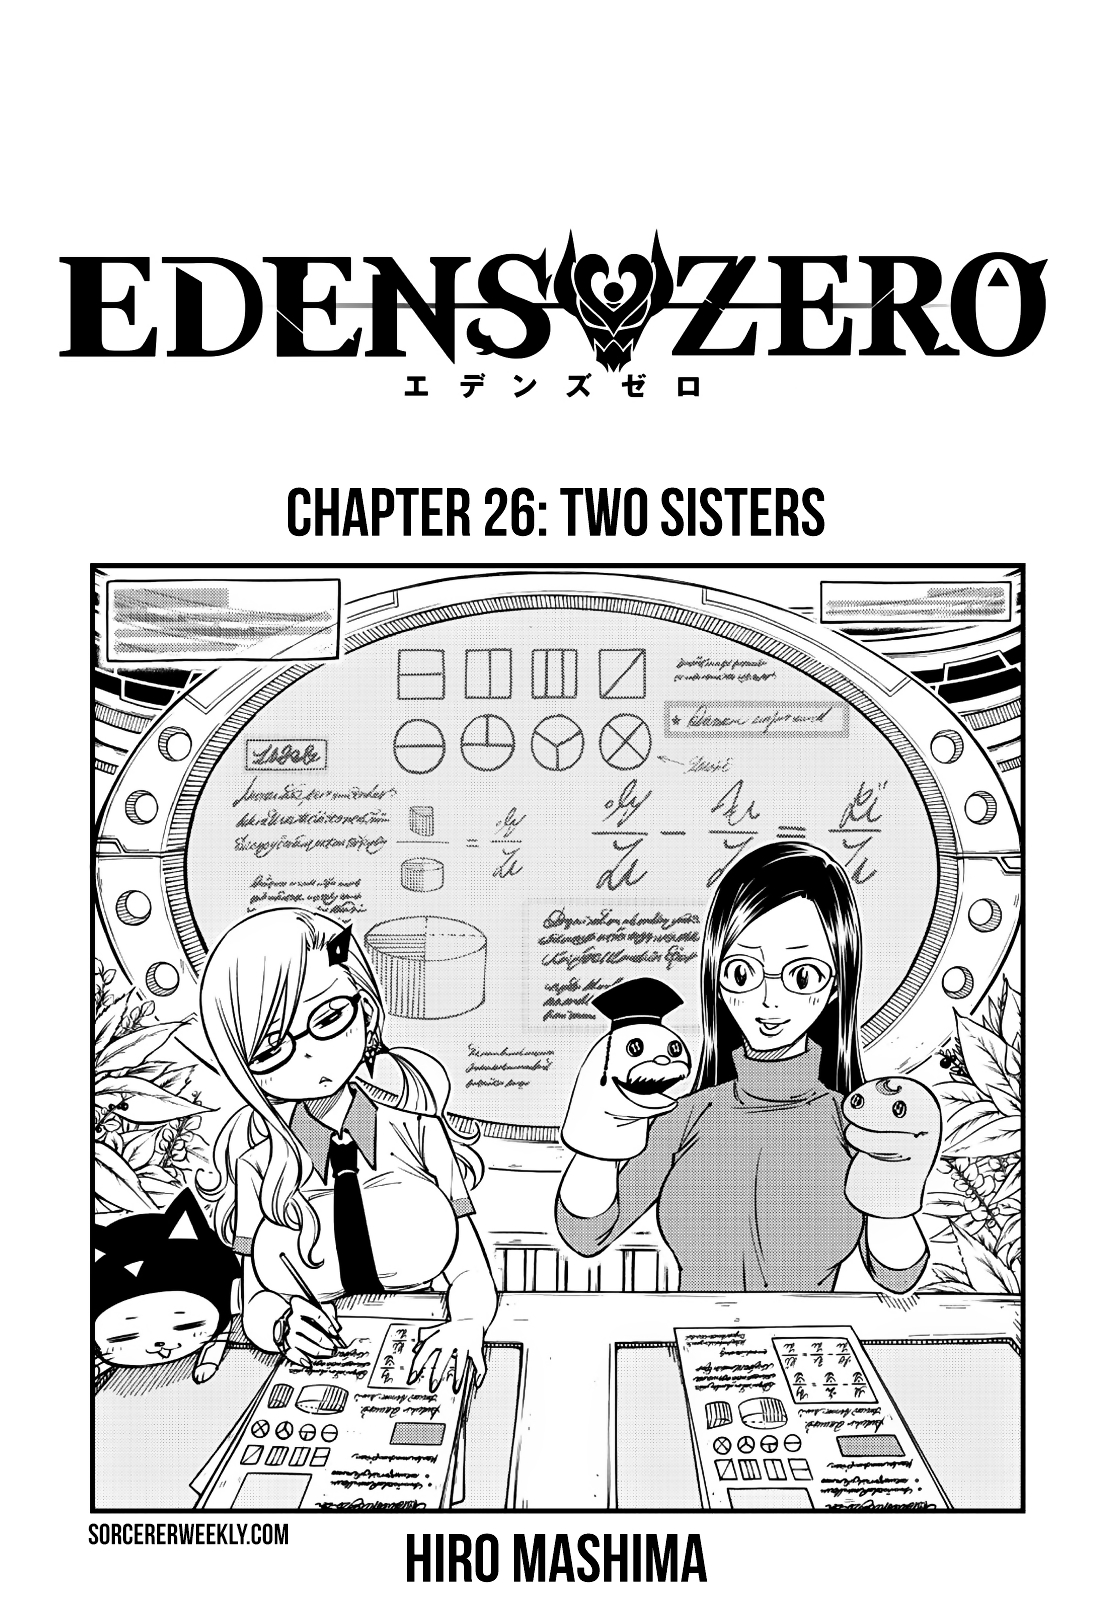 Edens Zero Ch. 26 Two Sisters